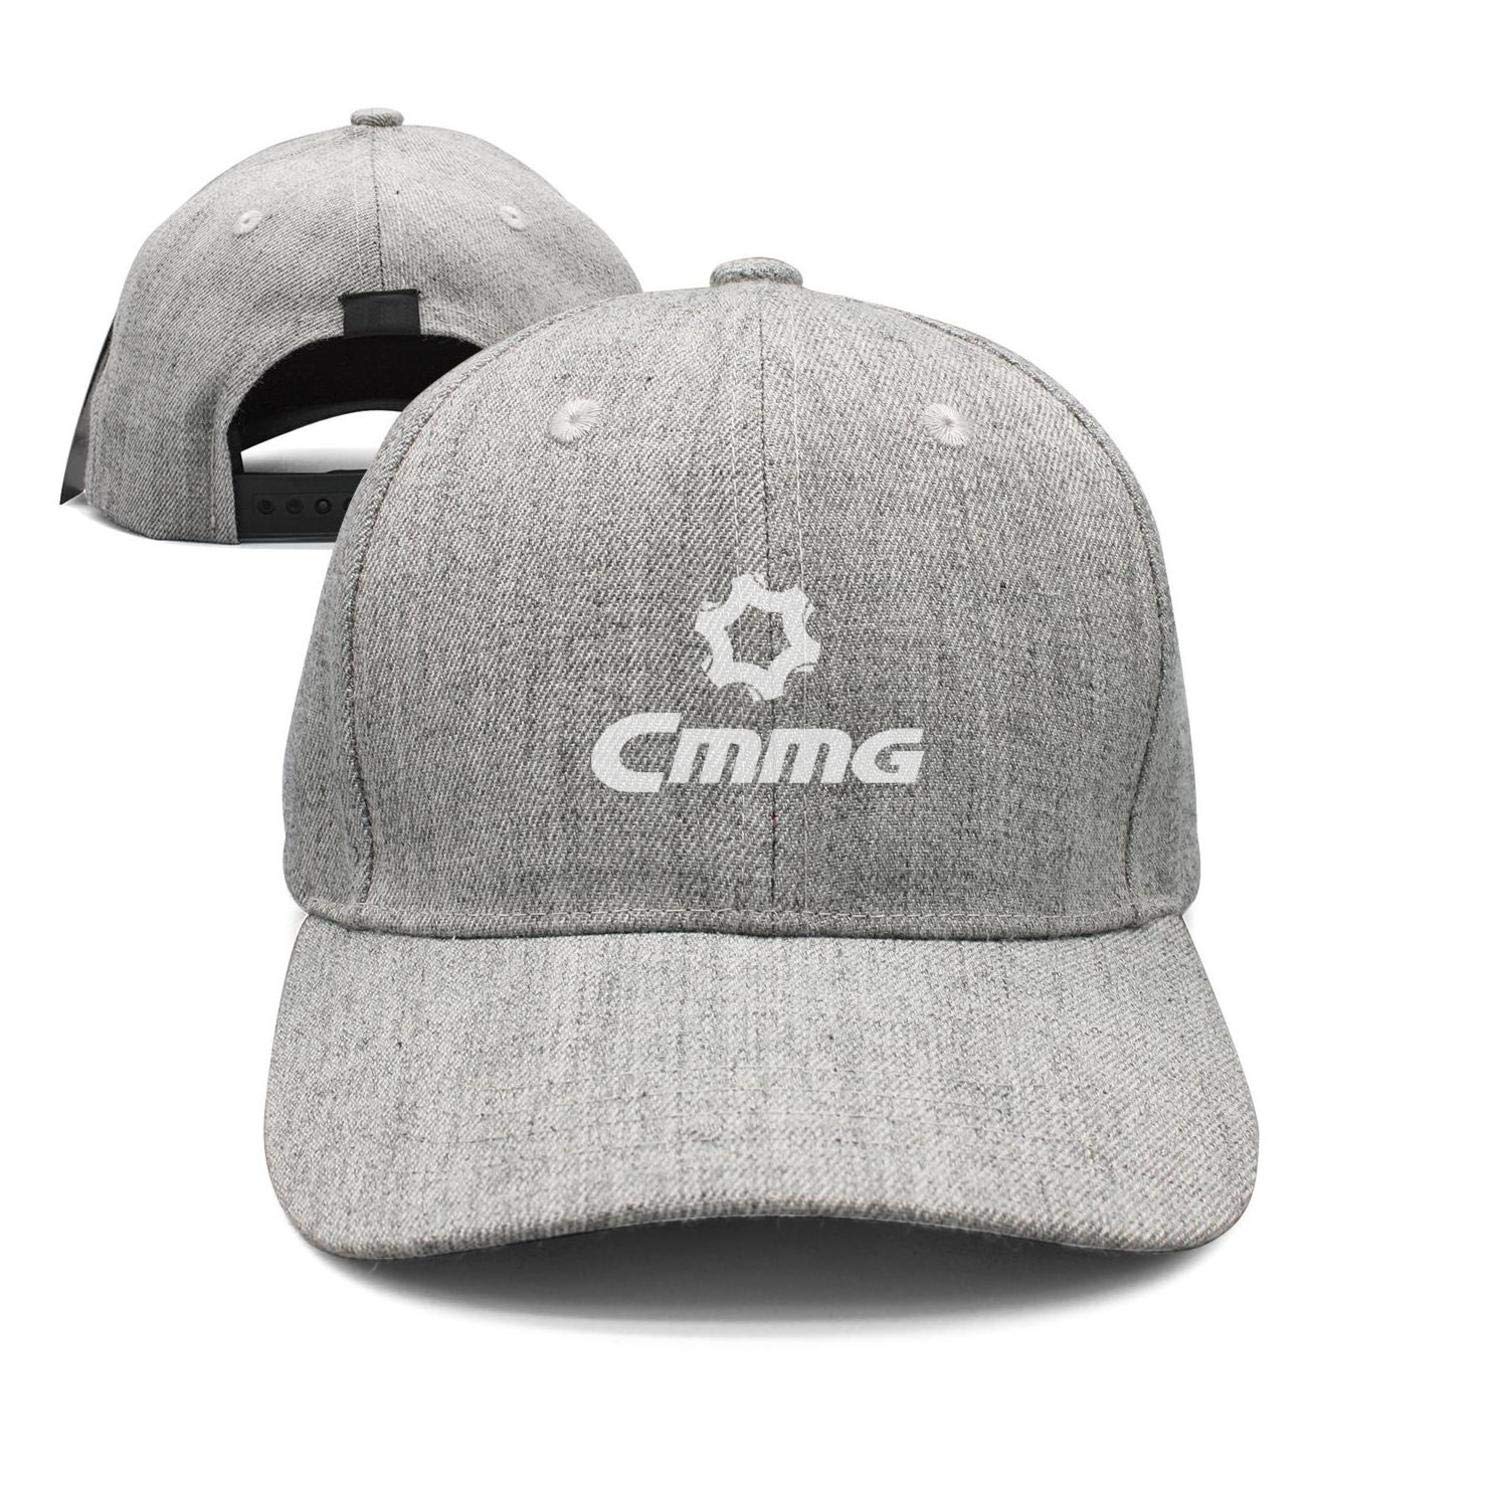 CMMG Logo - NAIT CMMG Logo Cap Adjustable Cotton Back Closure: Clothing